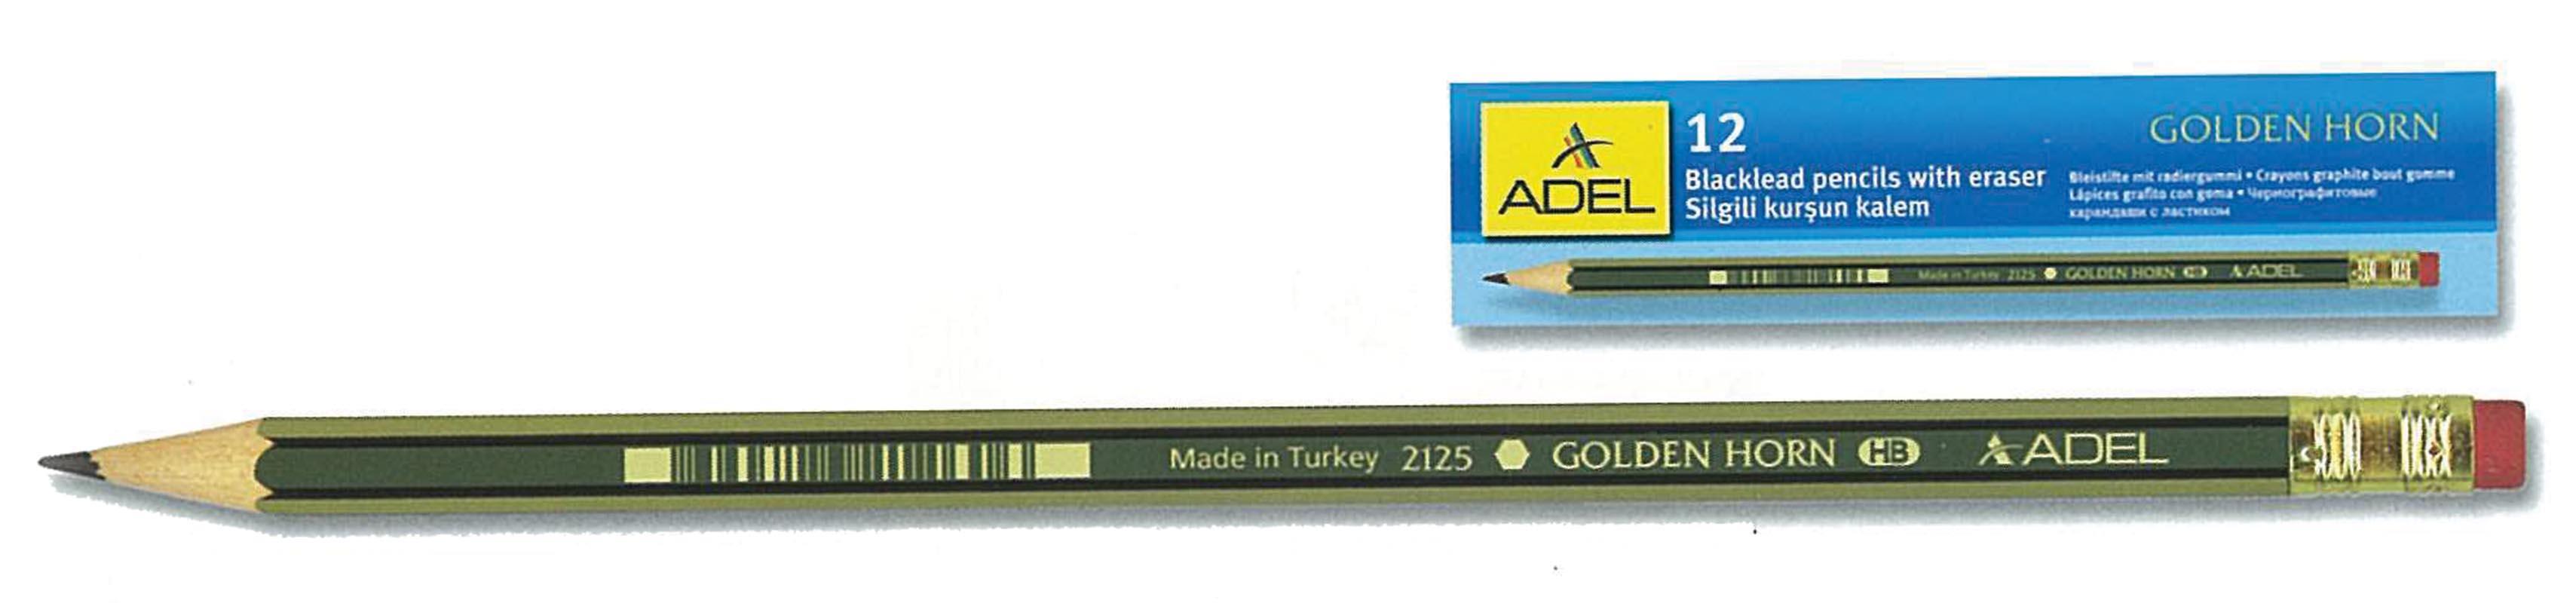 Adel Adel μολύβι με σβήστρα Golden horn ΗΒ 21655---03-2